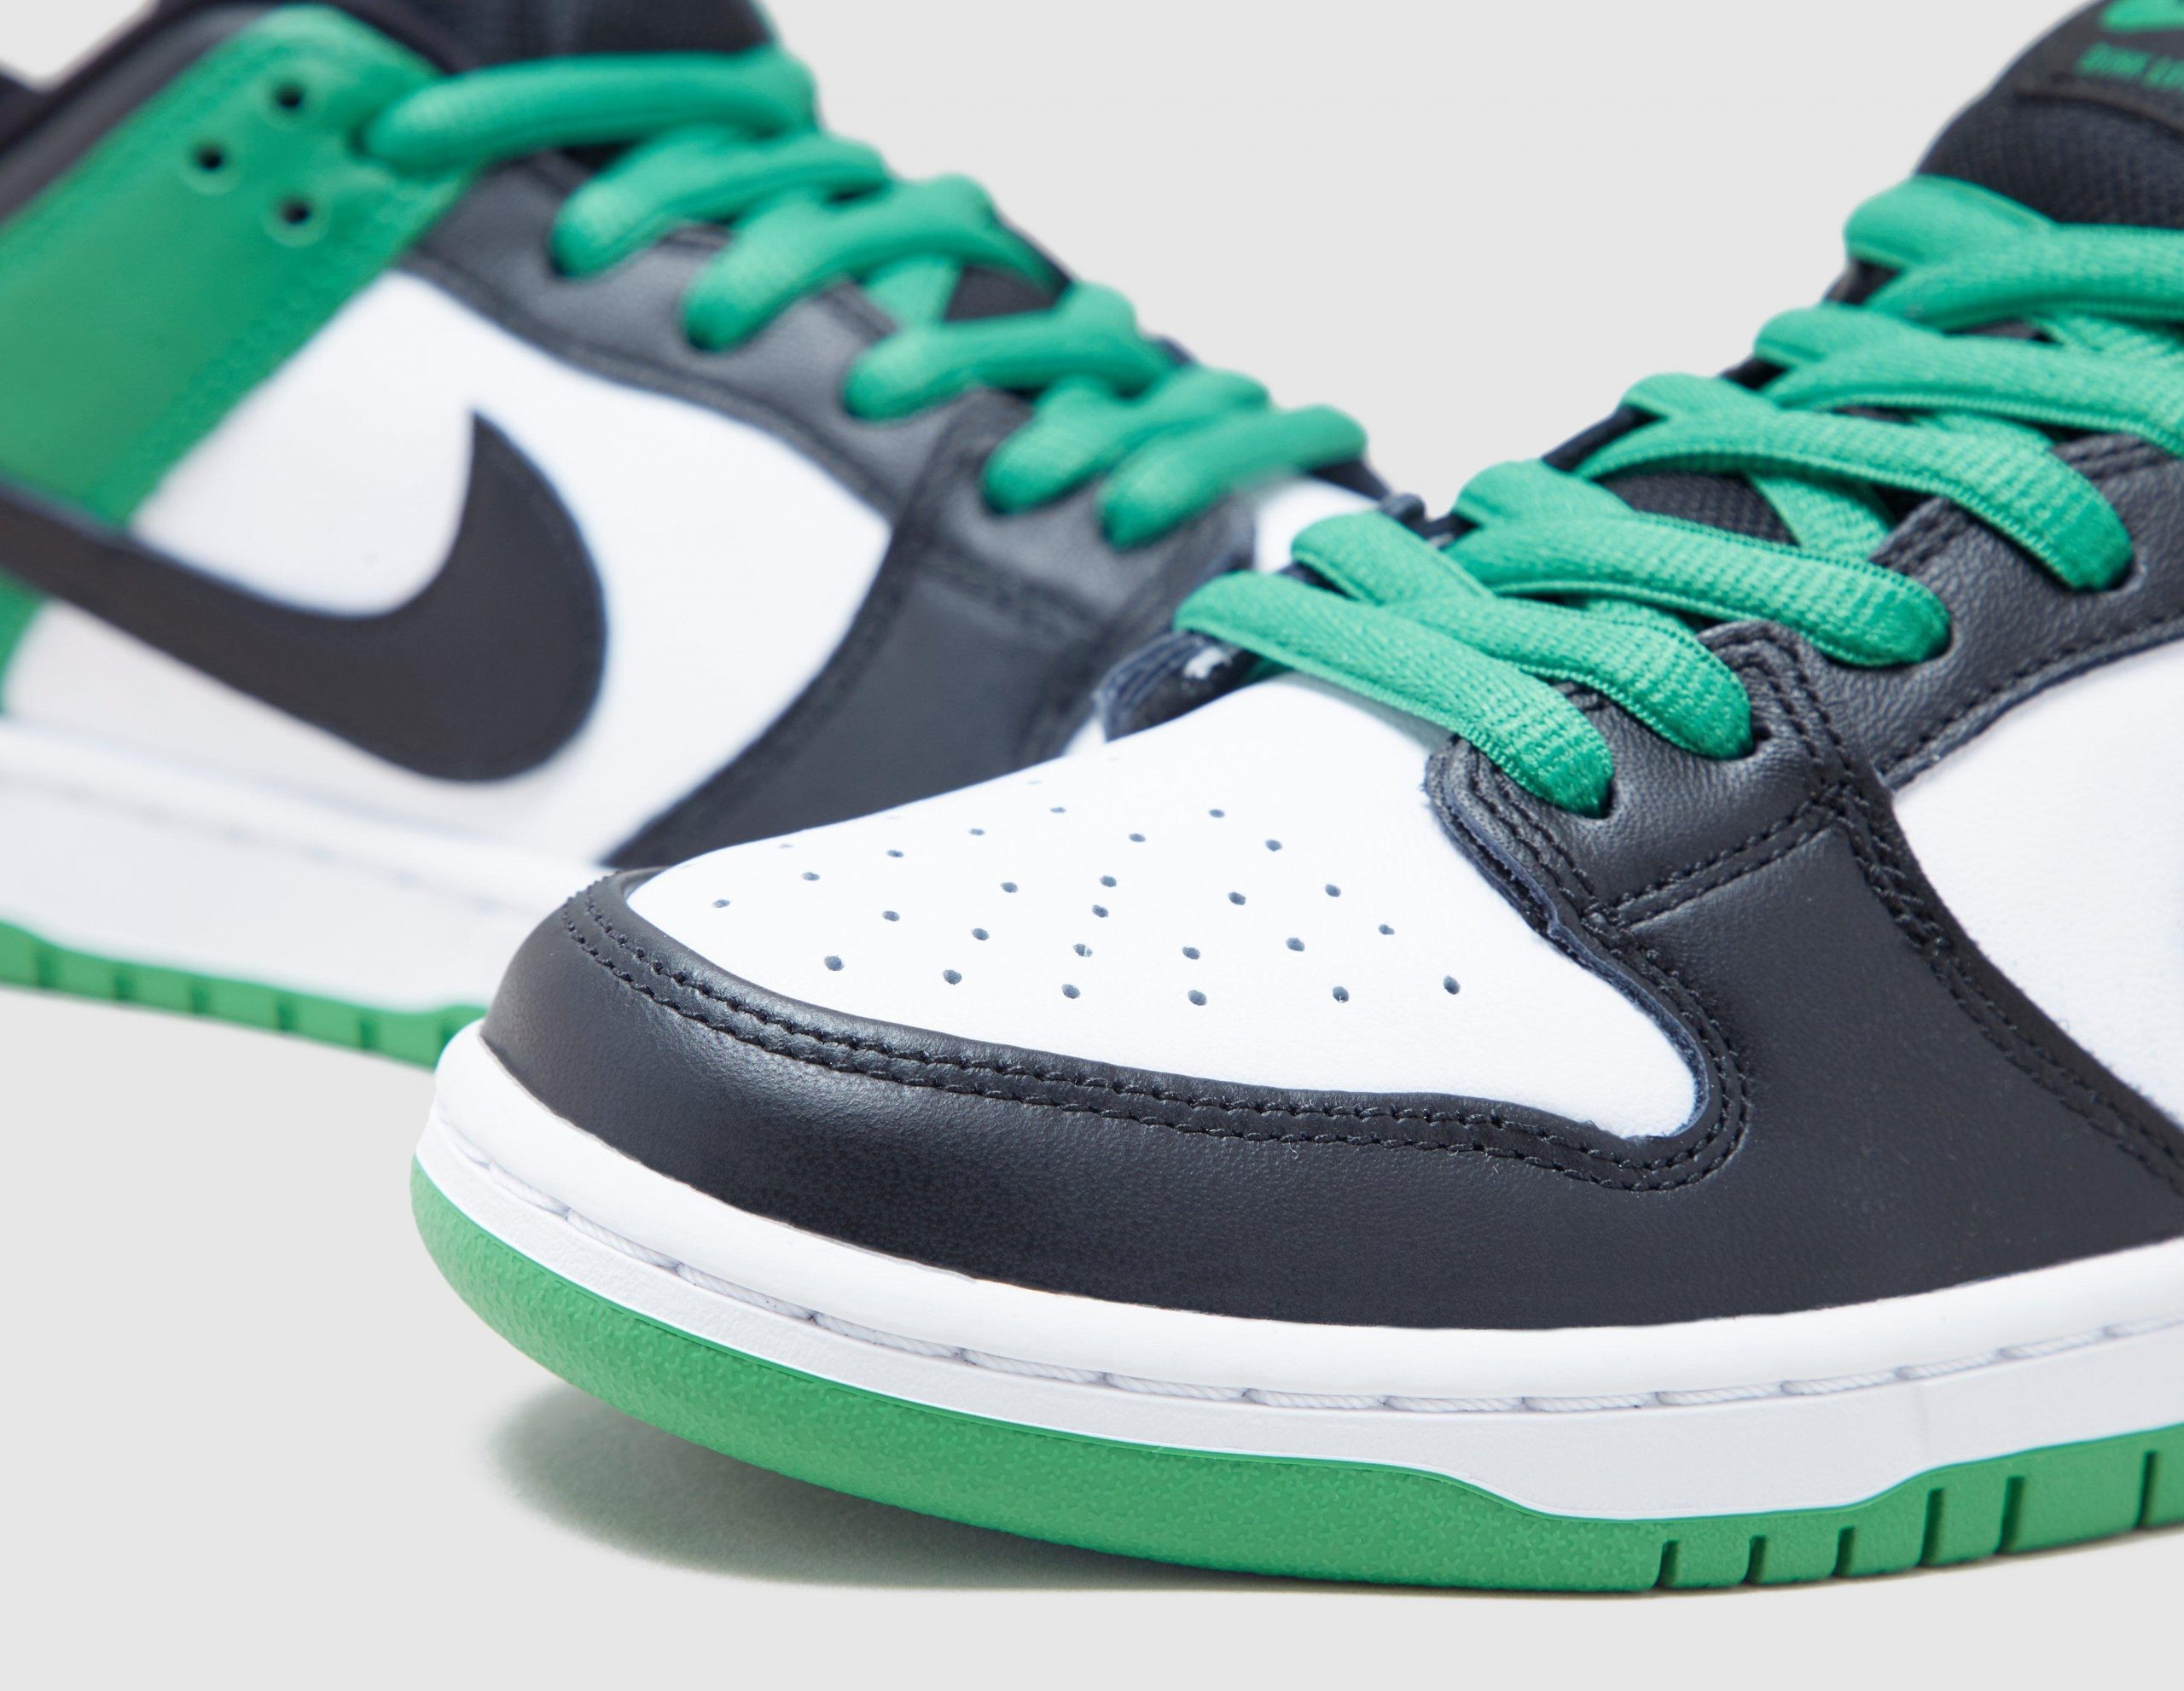 Nike SB Dunk Low “Classic Green” Release Info